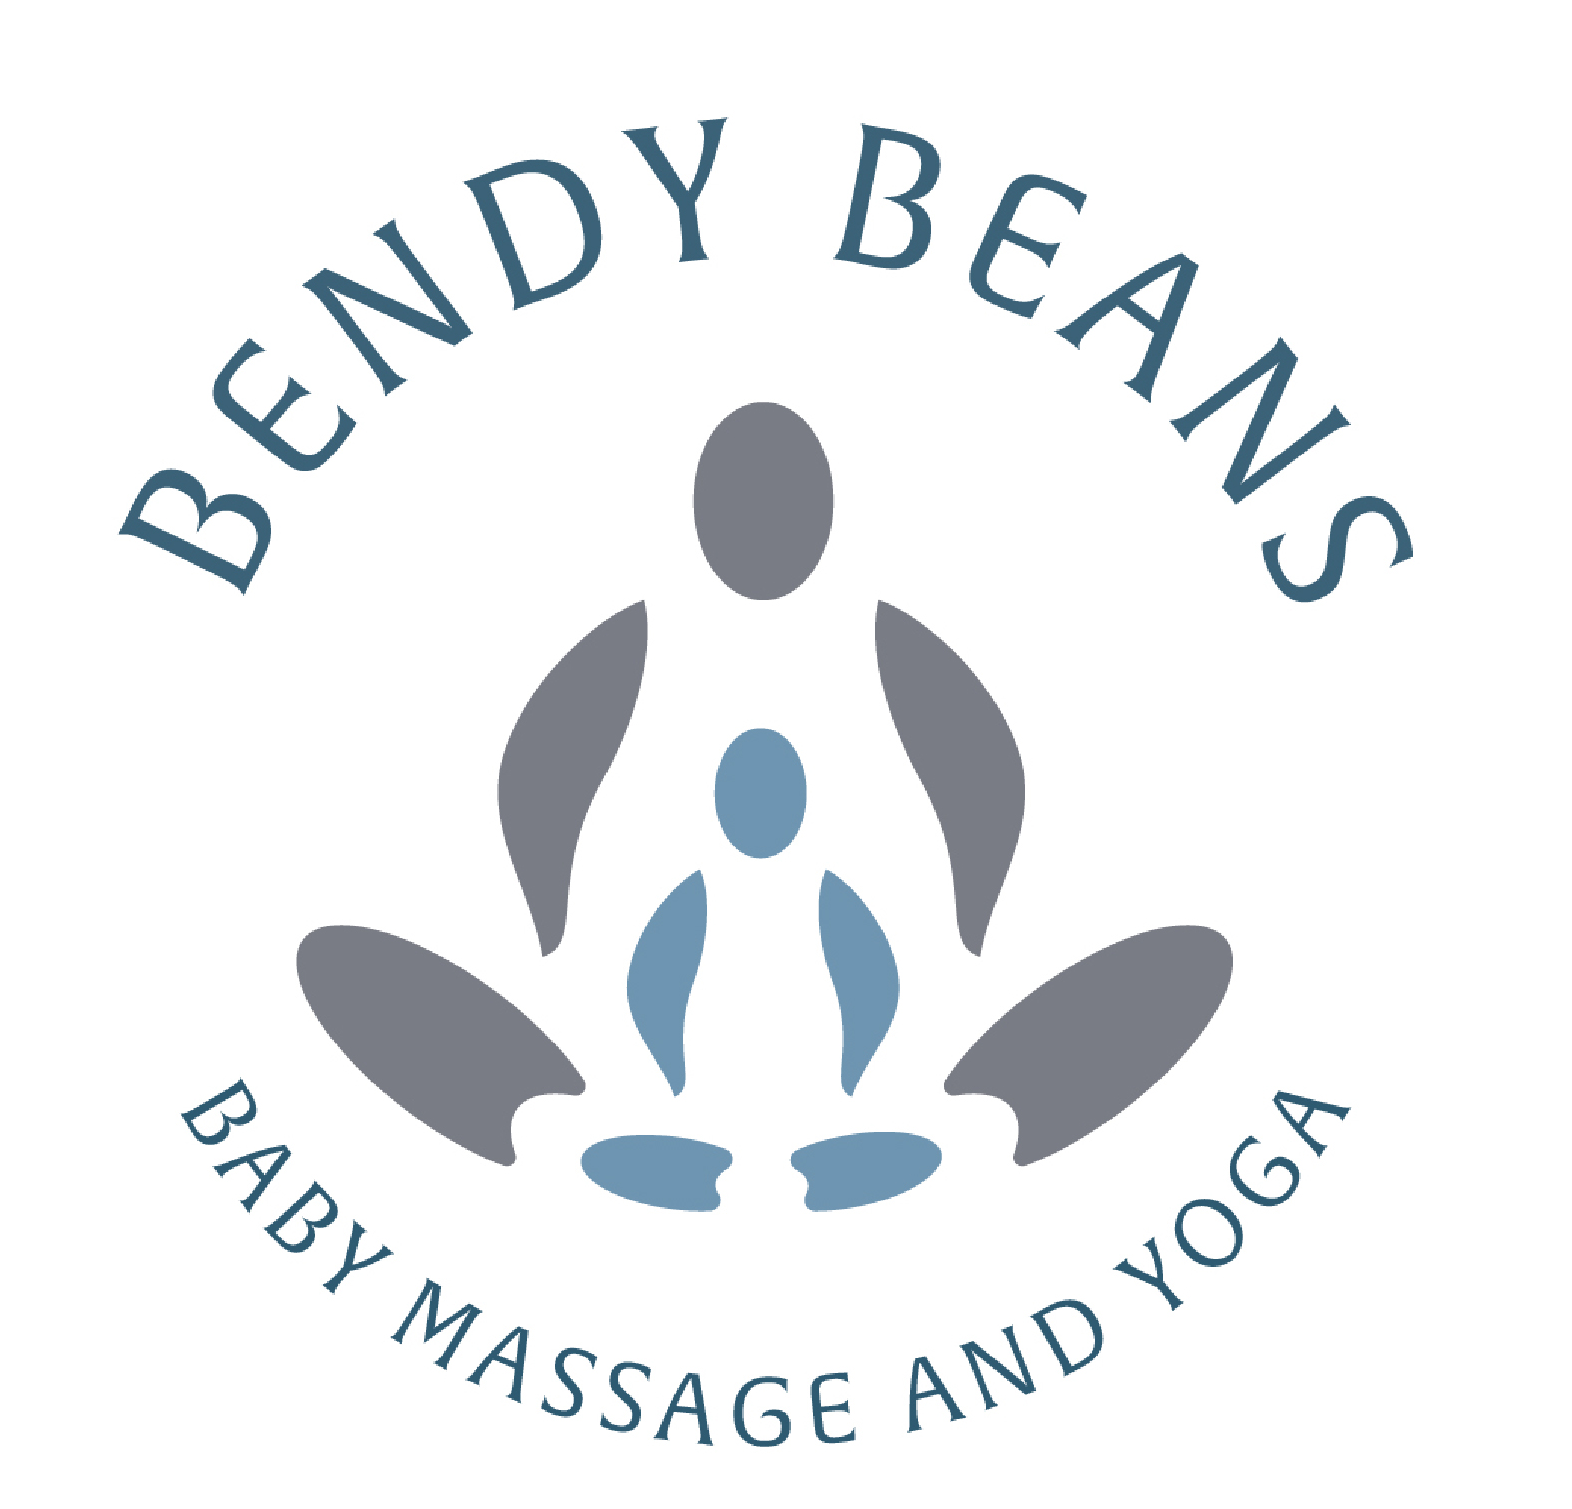 Bendy Beans's logo